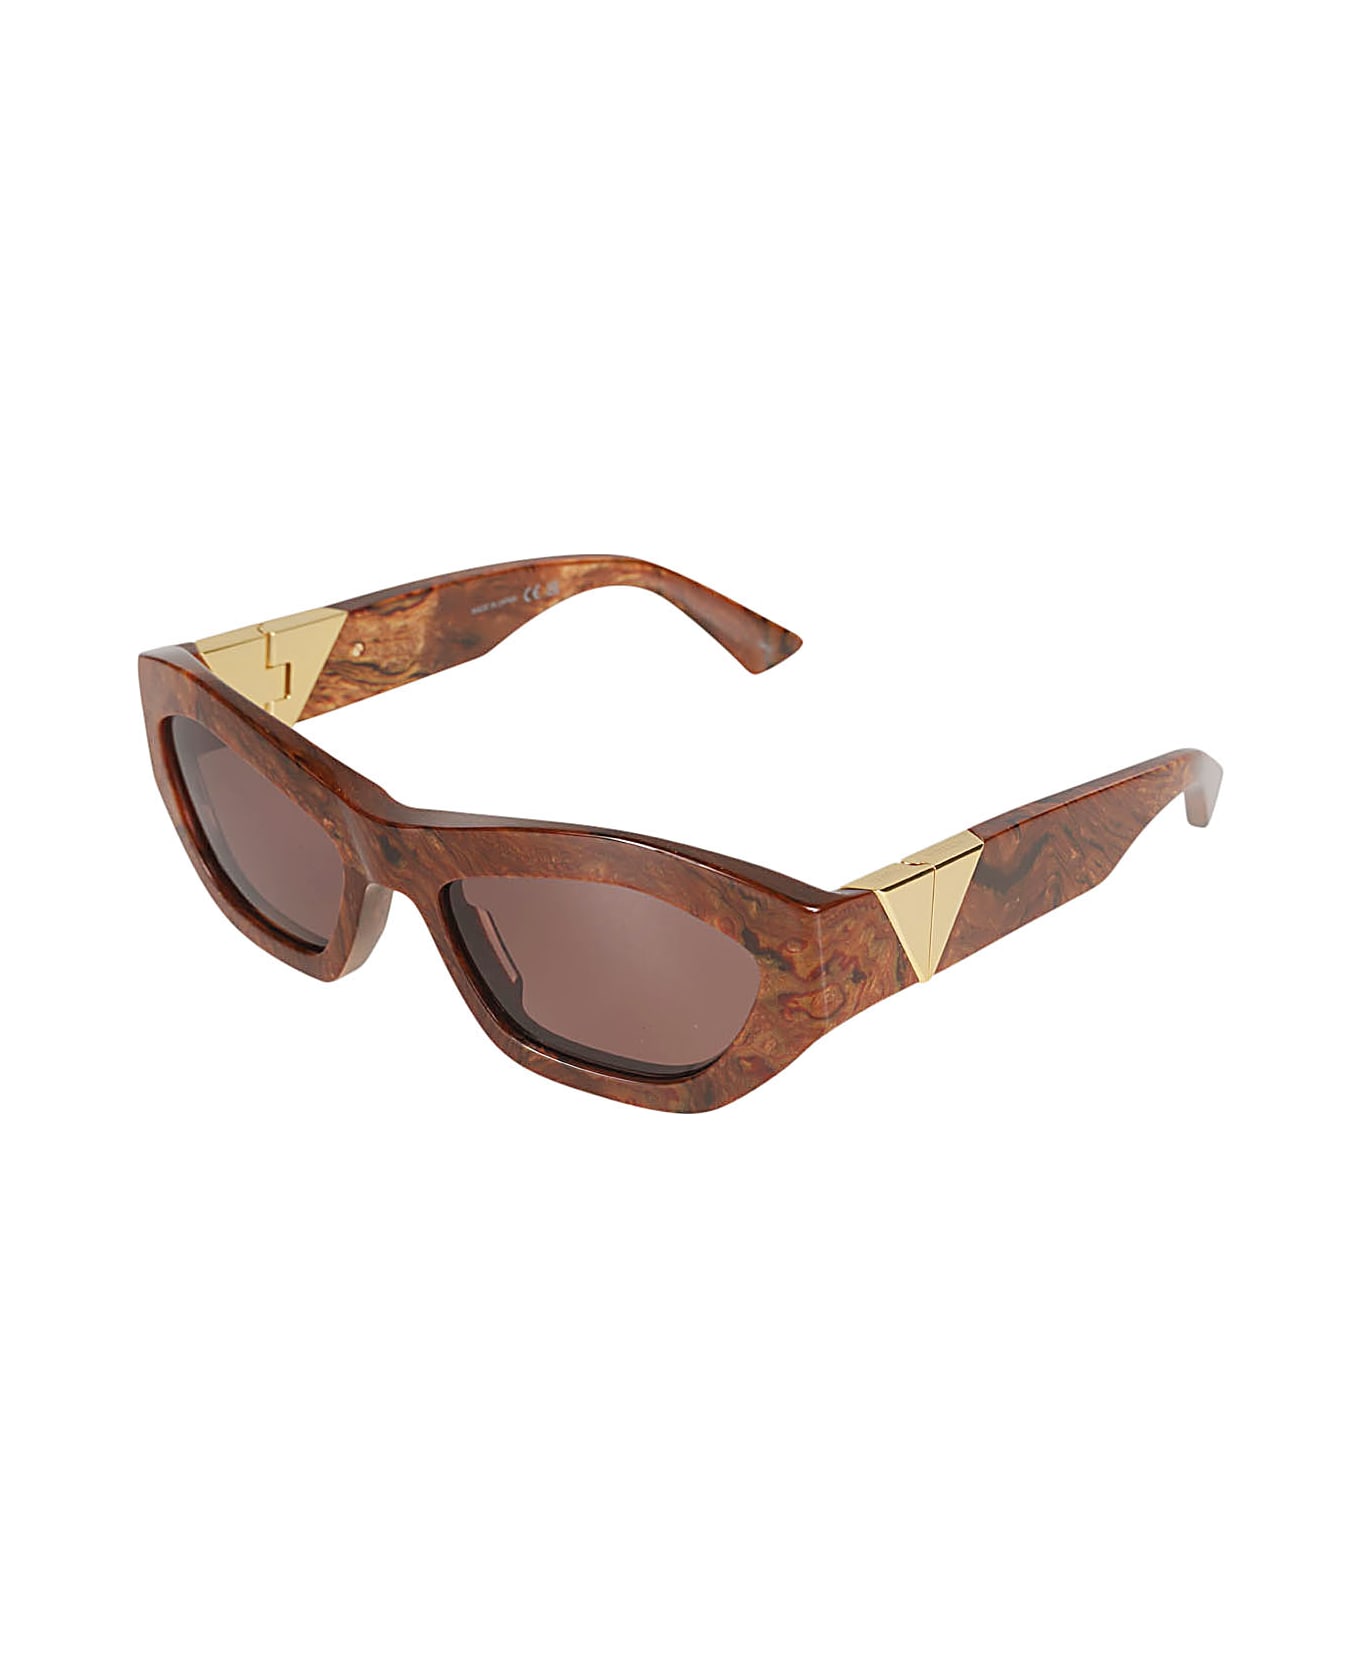 Bottega Veneta Eyewear Triangle Hinge Wood Effect Sunglasses - Brown/Havana/Transparent